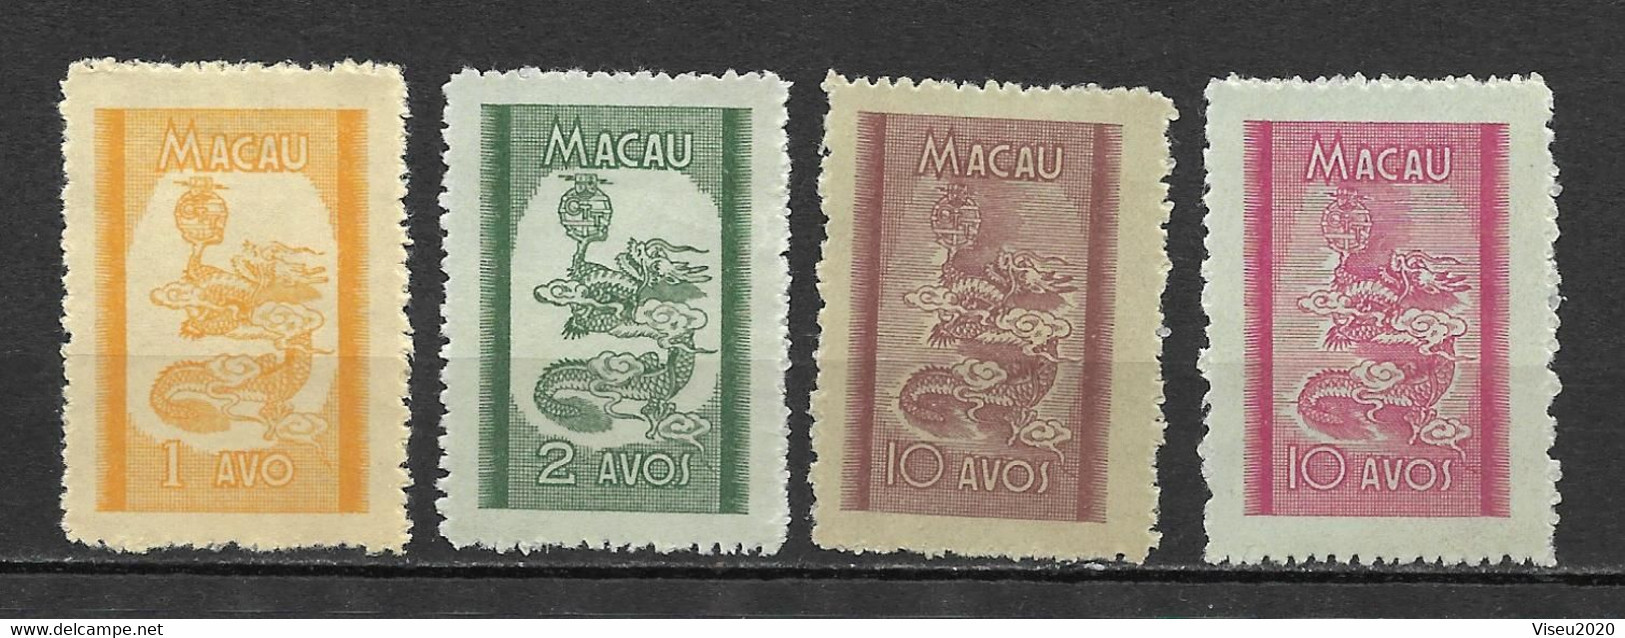 Portugal (Macau) 1950 – Dragões (Dragons) Emissão Local -  Complet Set Macao - Ungebraucht